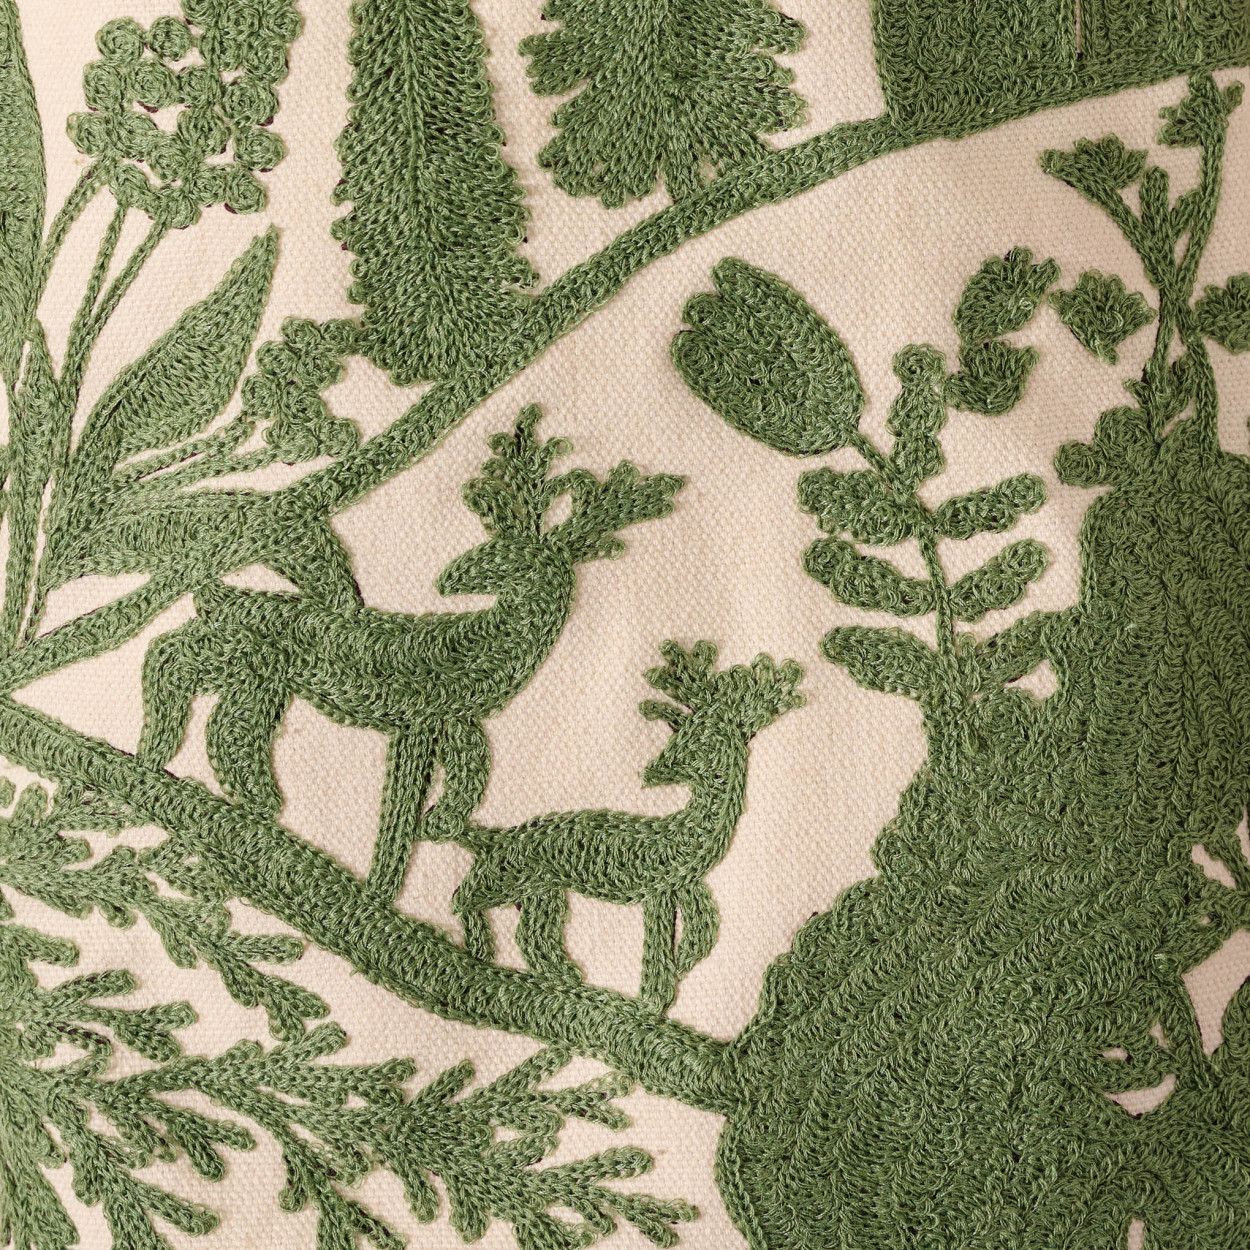 Folklore Embroidered Stocking | Magnolia